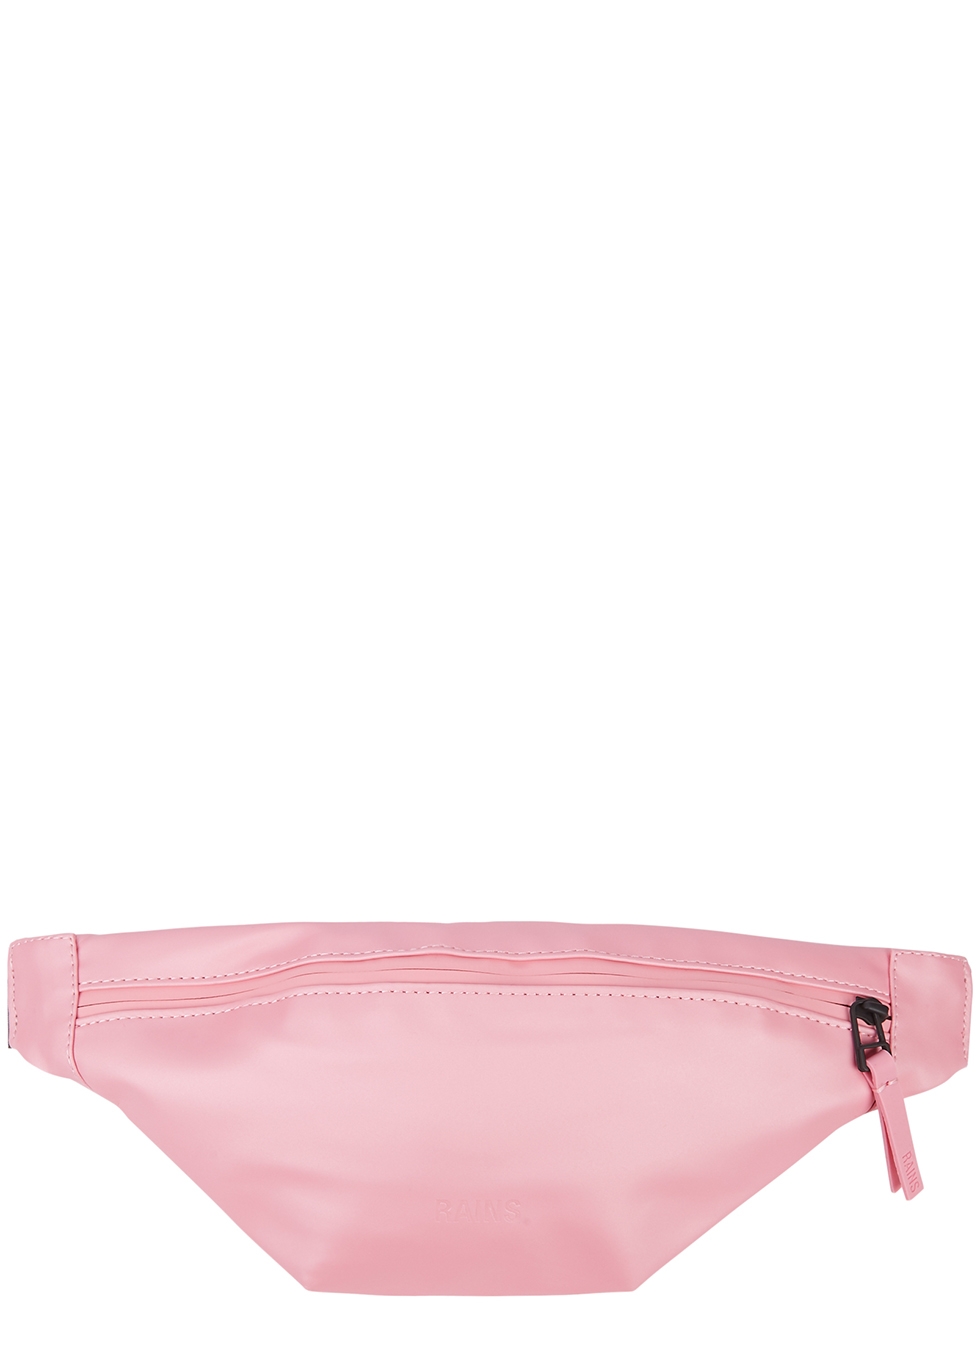 Rains Pink rubberised belt bag - Harvey Nichols